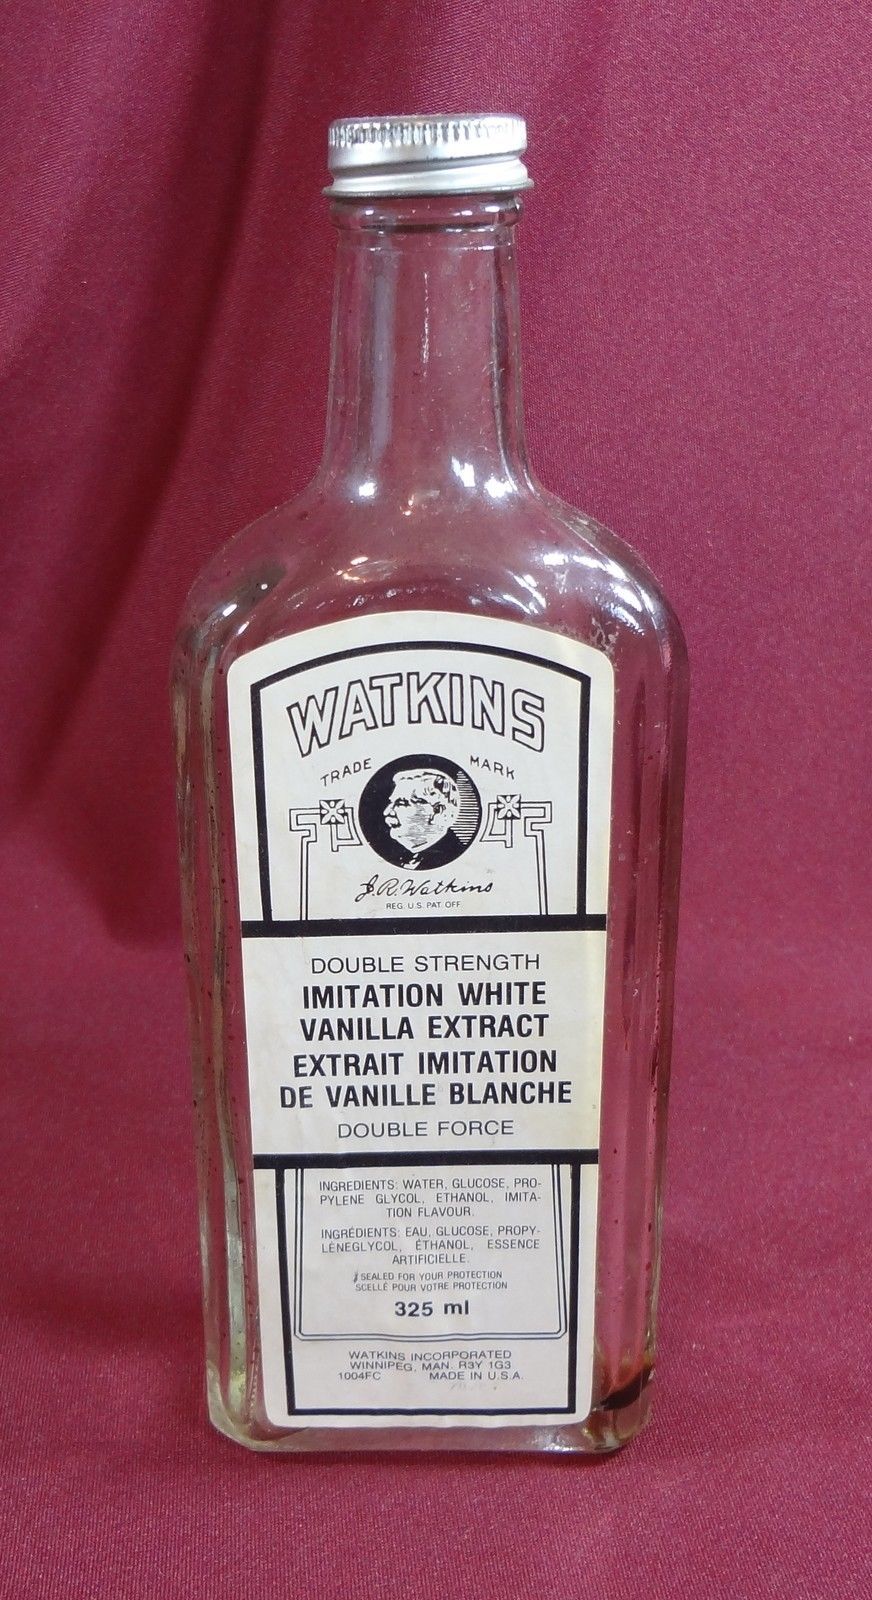 Primary image for Watkins Double Strength Imitation White Vanilla Extract Bottle 11 oz 325 ml